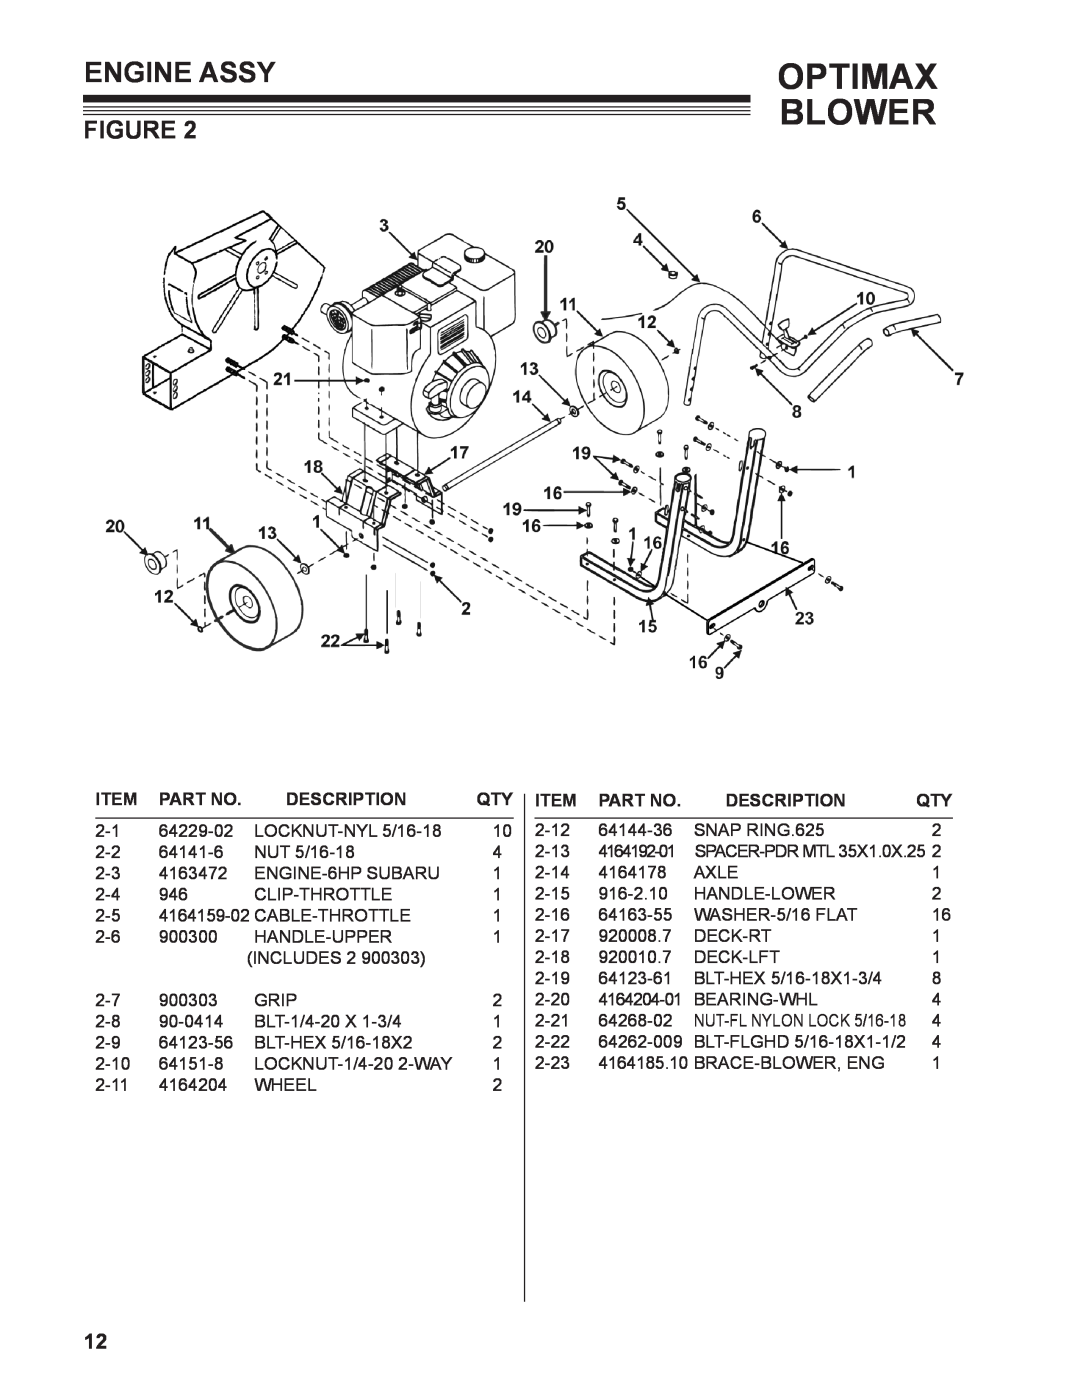 Little Wonder LB601-00-01 technical manual Engine Assy, Optimax Blower, Description, NUT-FL NYLON LOCK 5/16-18 